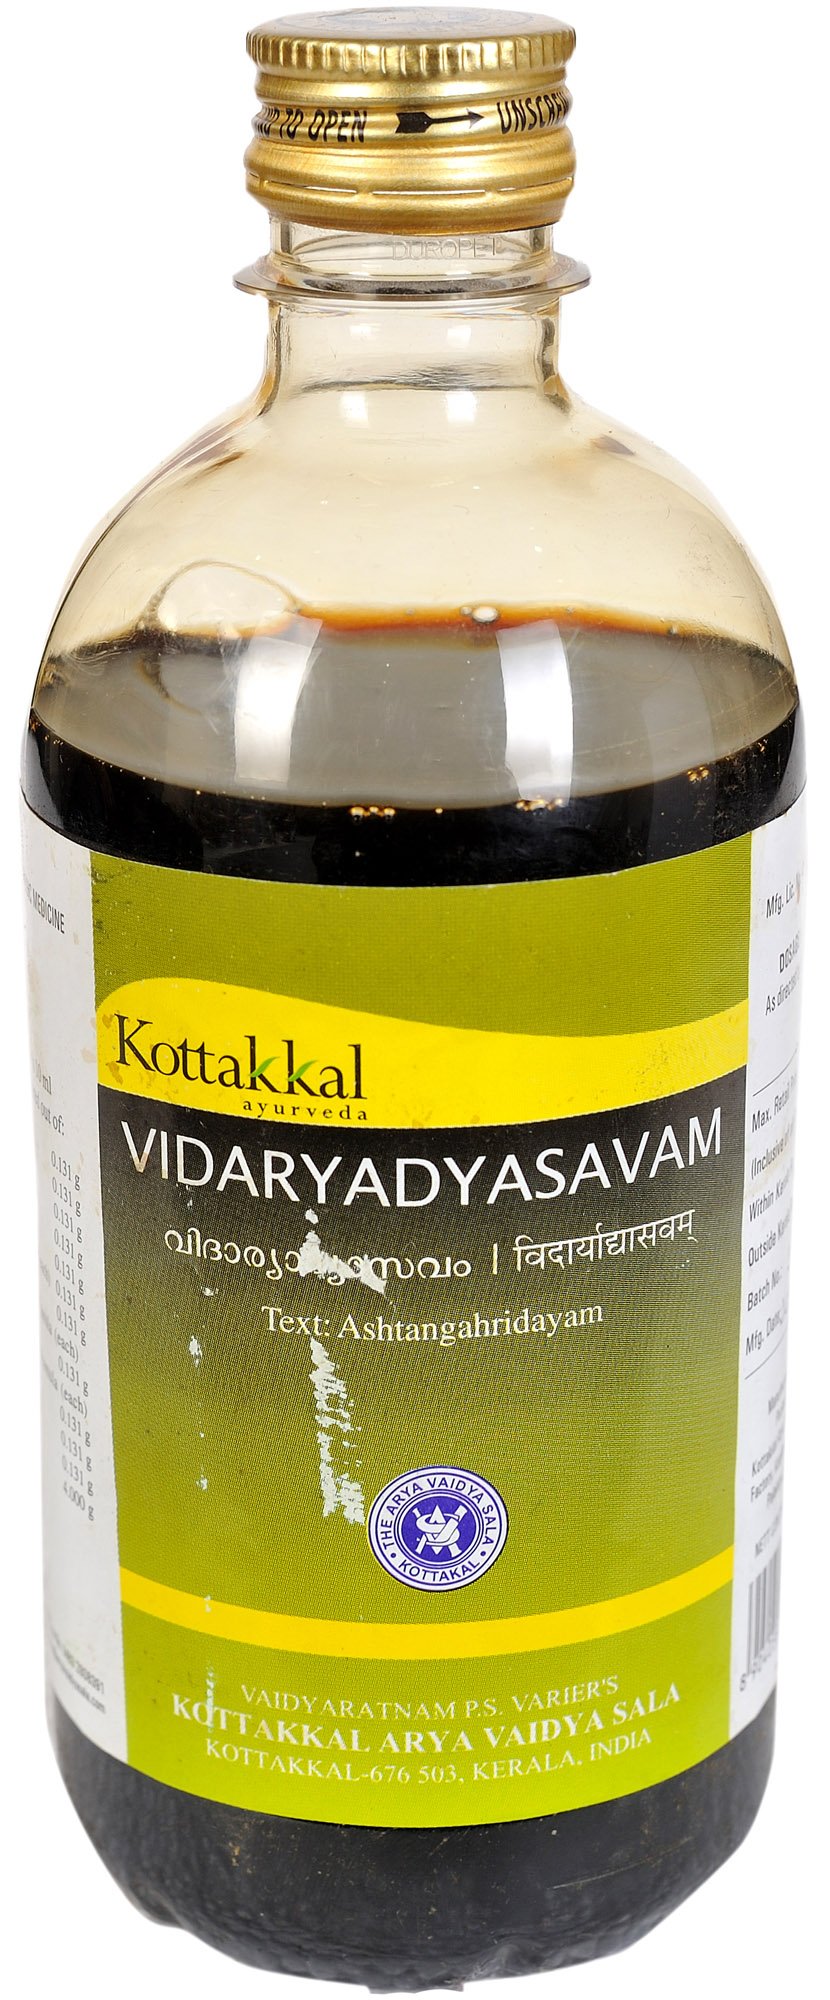 Vidaryadyasavam - book cover